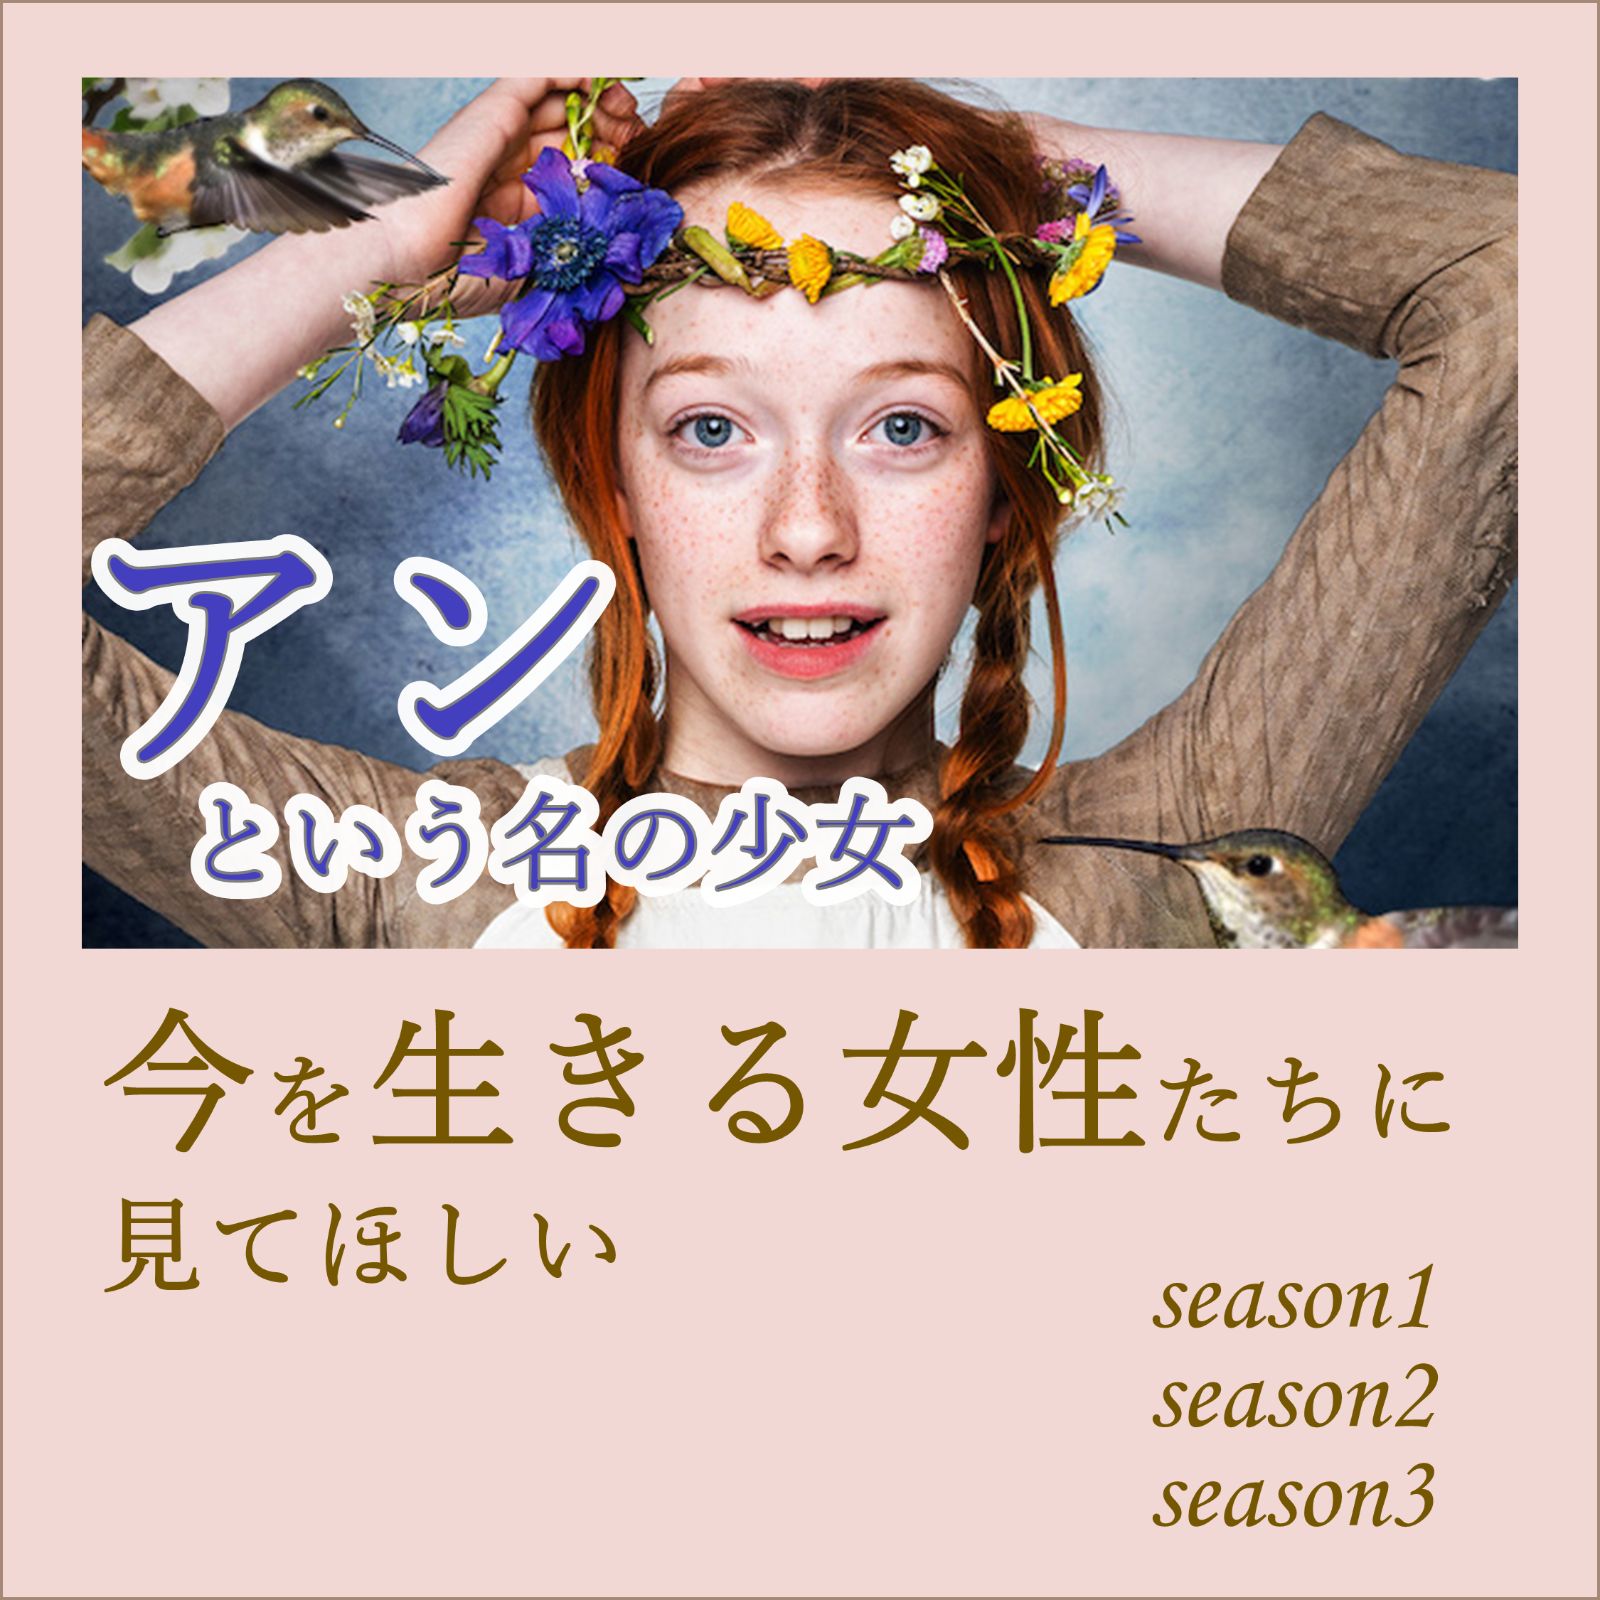 DVD/ブルーレイ特別価格【送料無料】 アンという名の少女 シーズン1、2、3セット